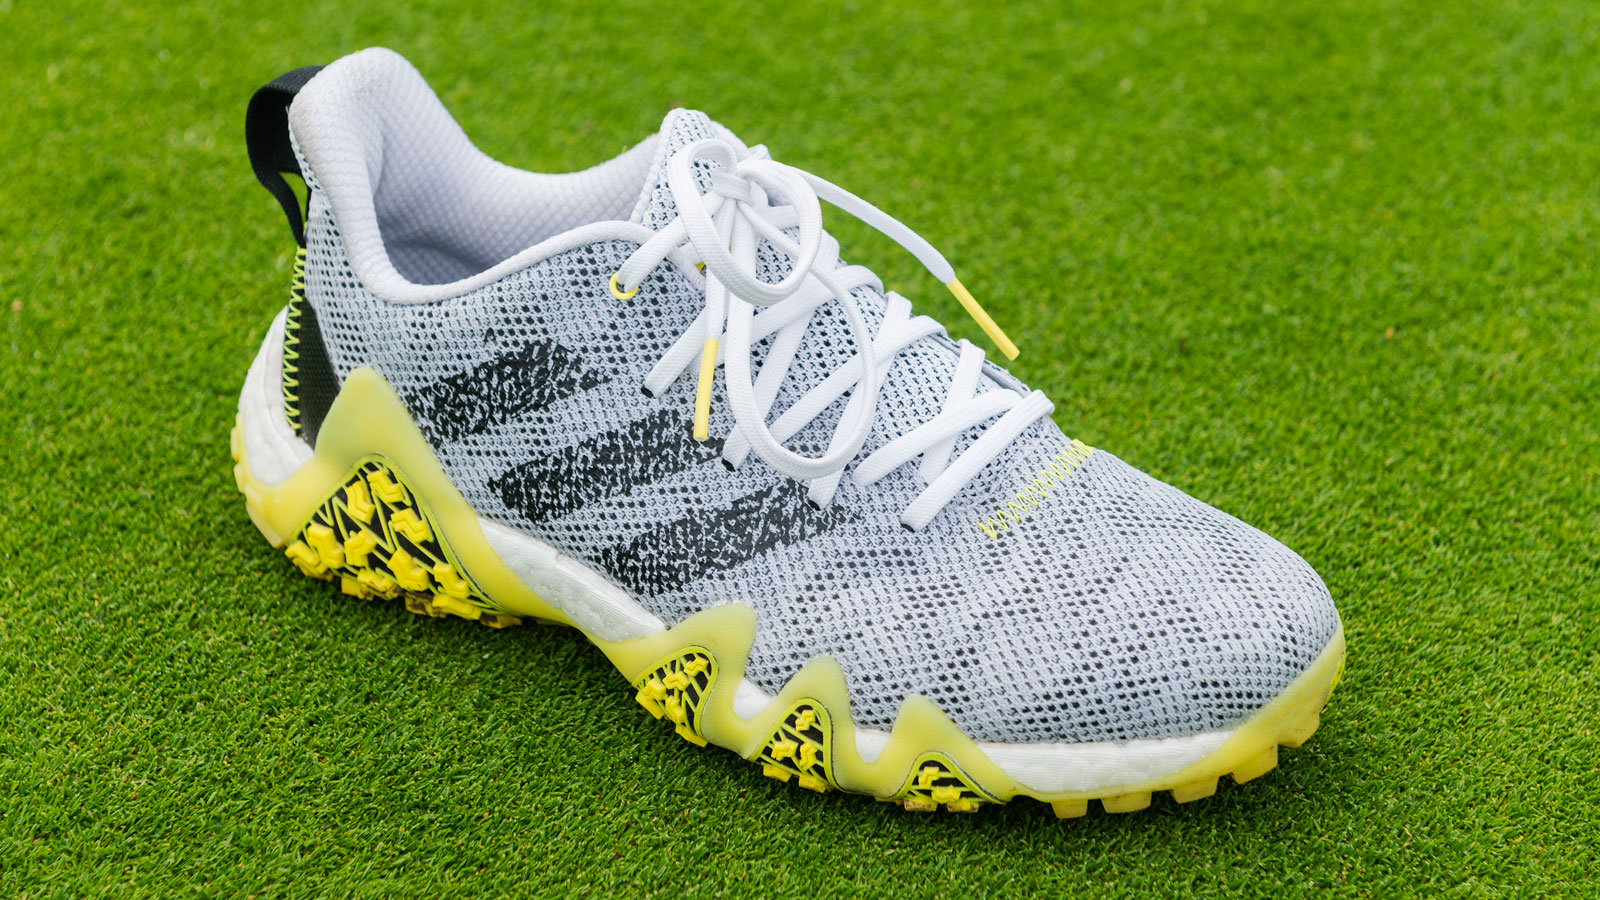 Adidas Codechaos 22 golf shoe review on grass